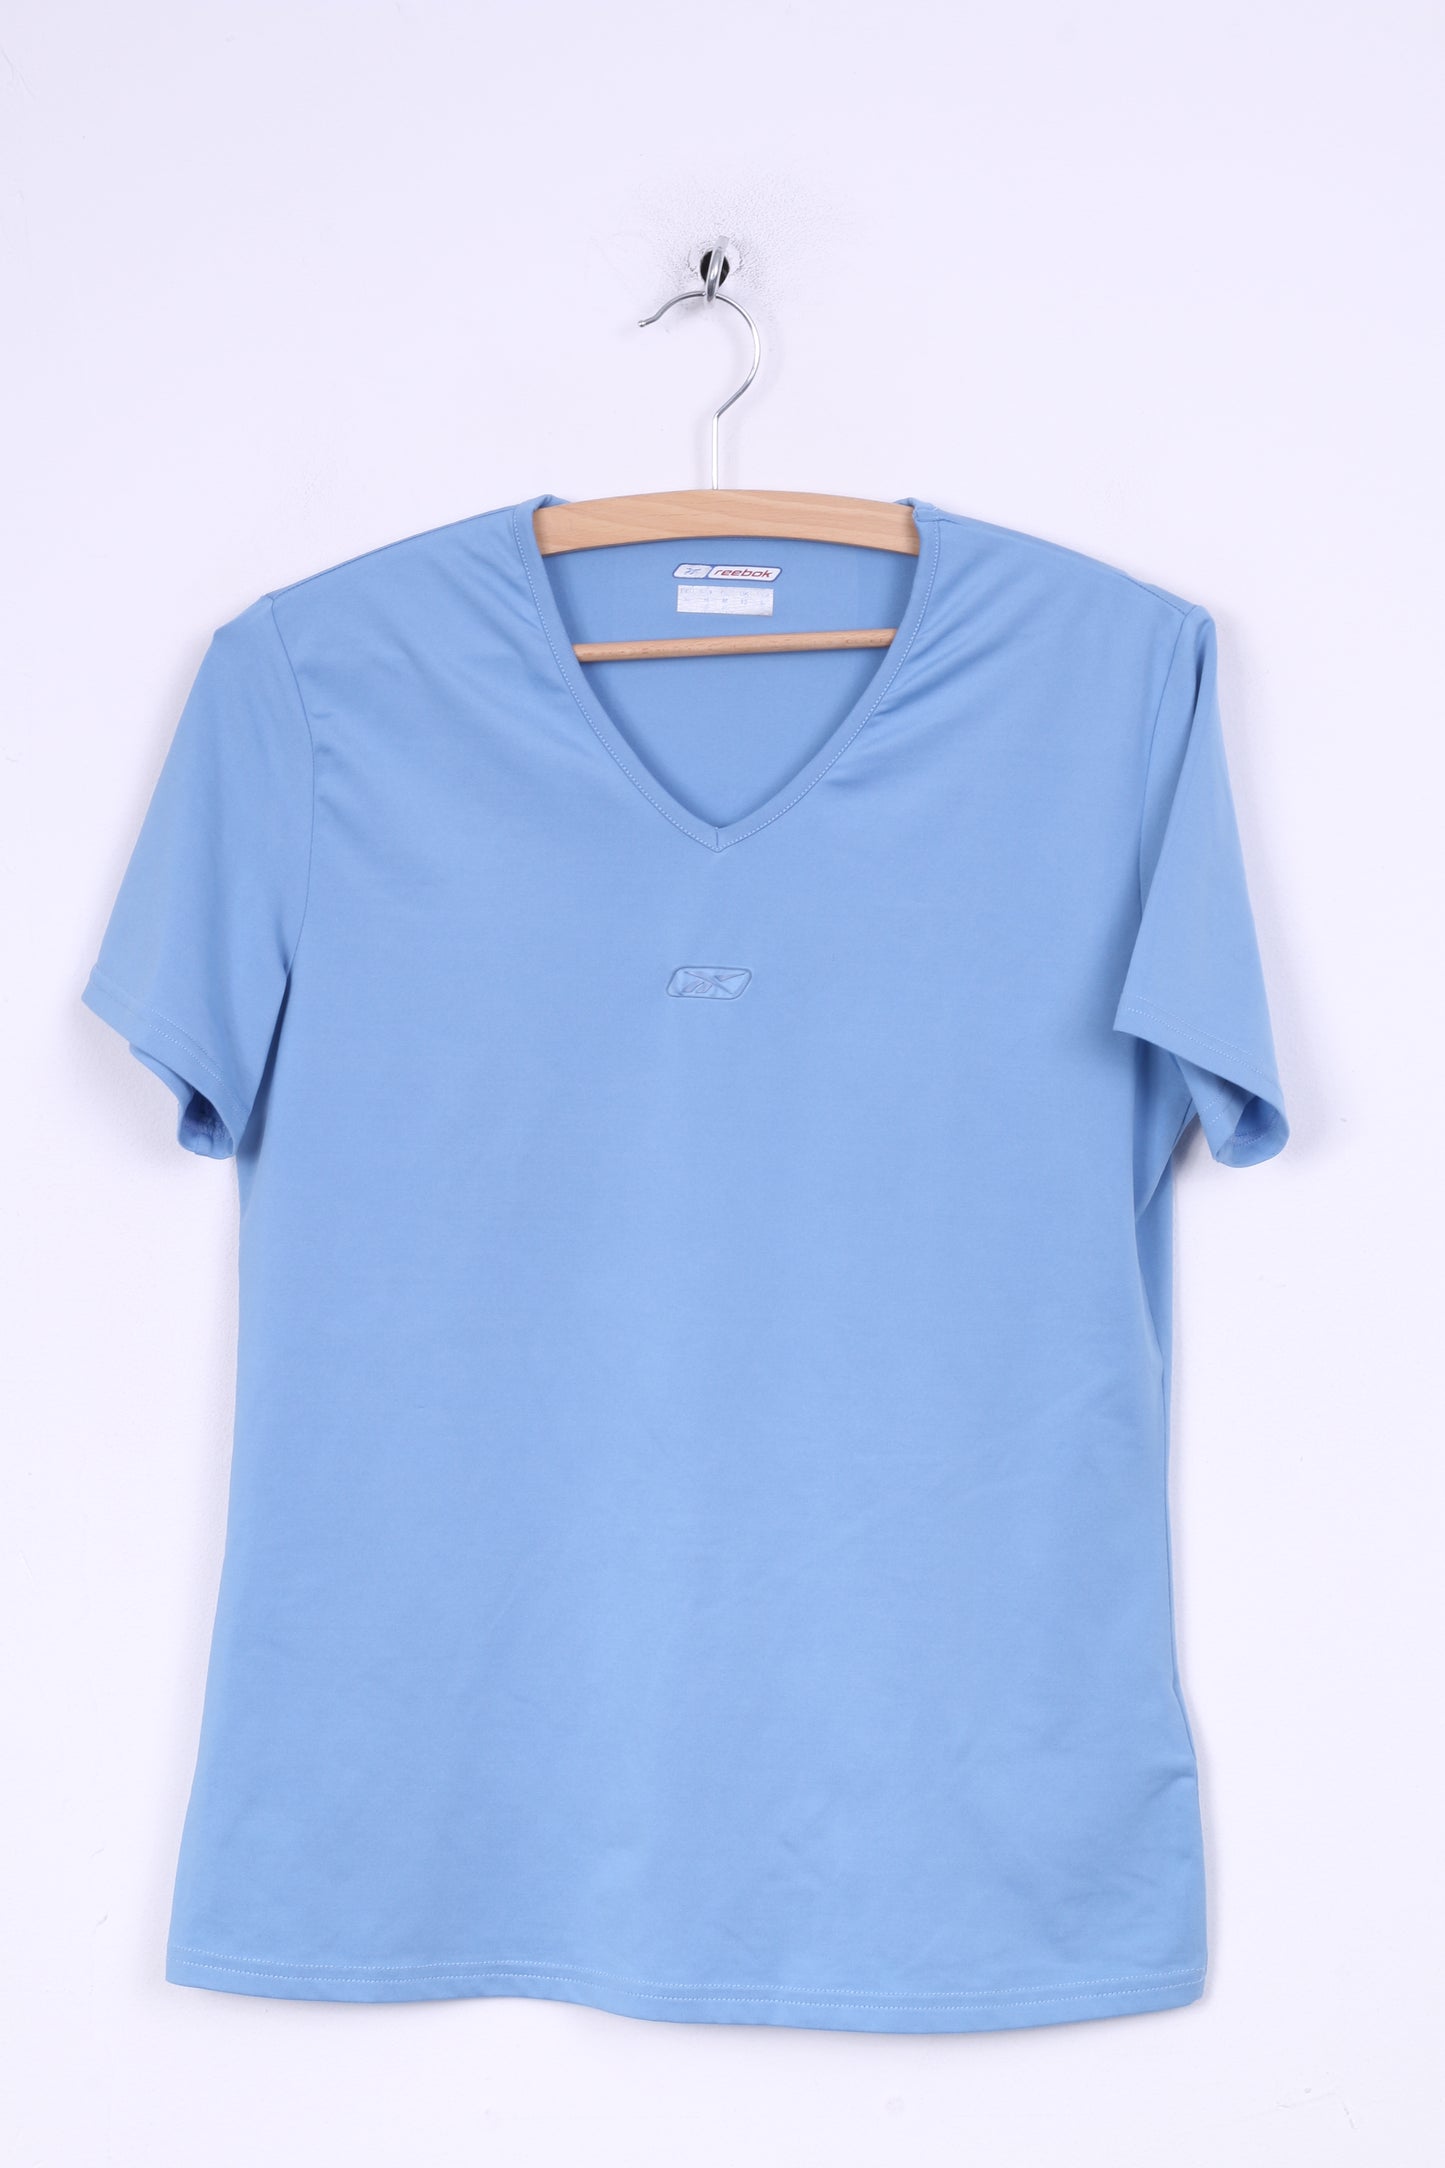 Reebok Womens M Shirt Light Blue V Neck Sport Short Sleeve